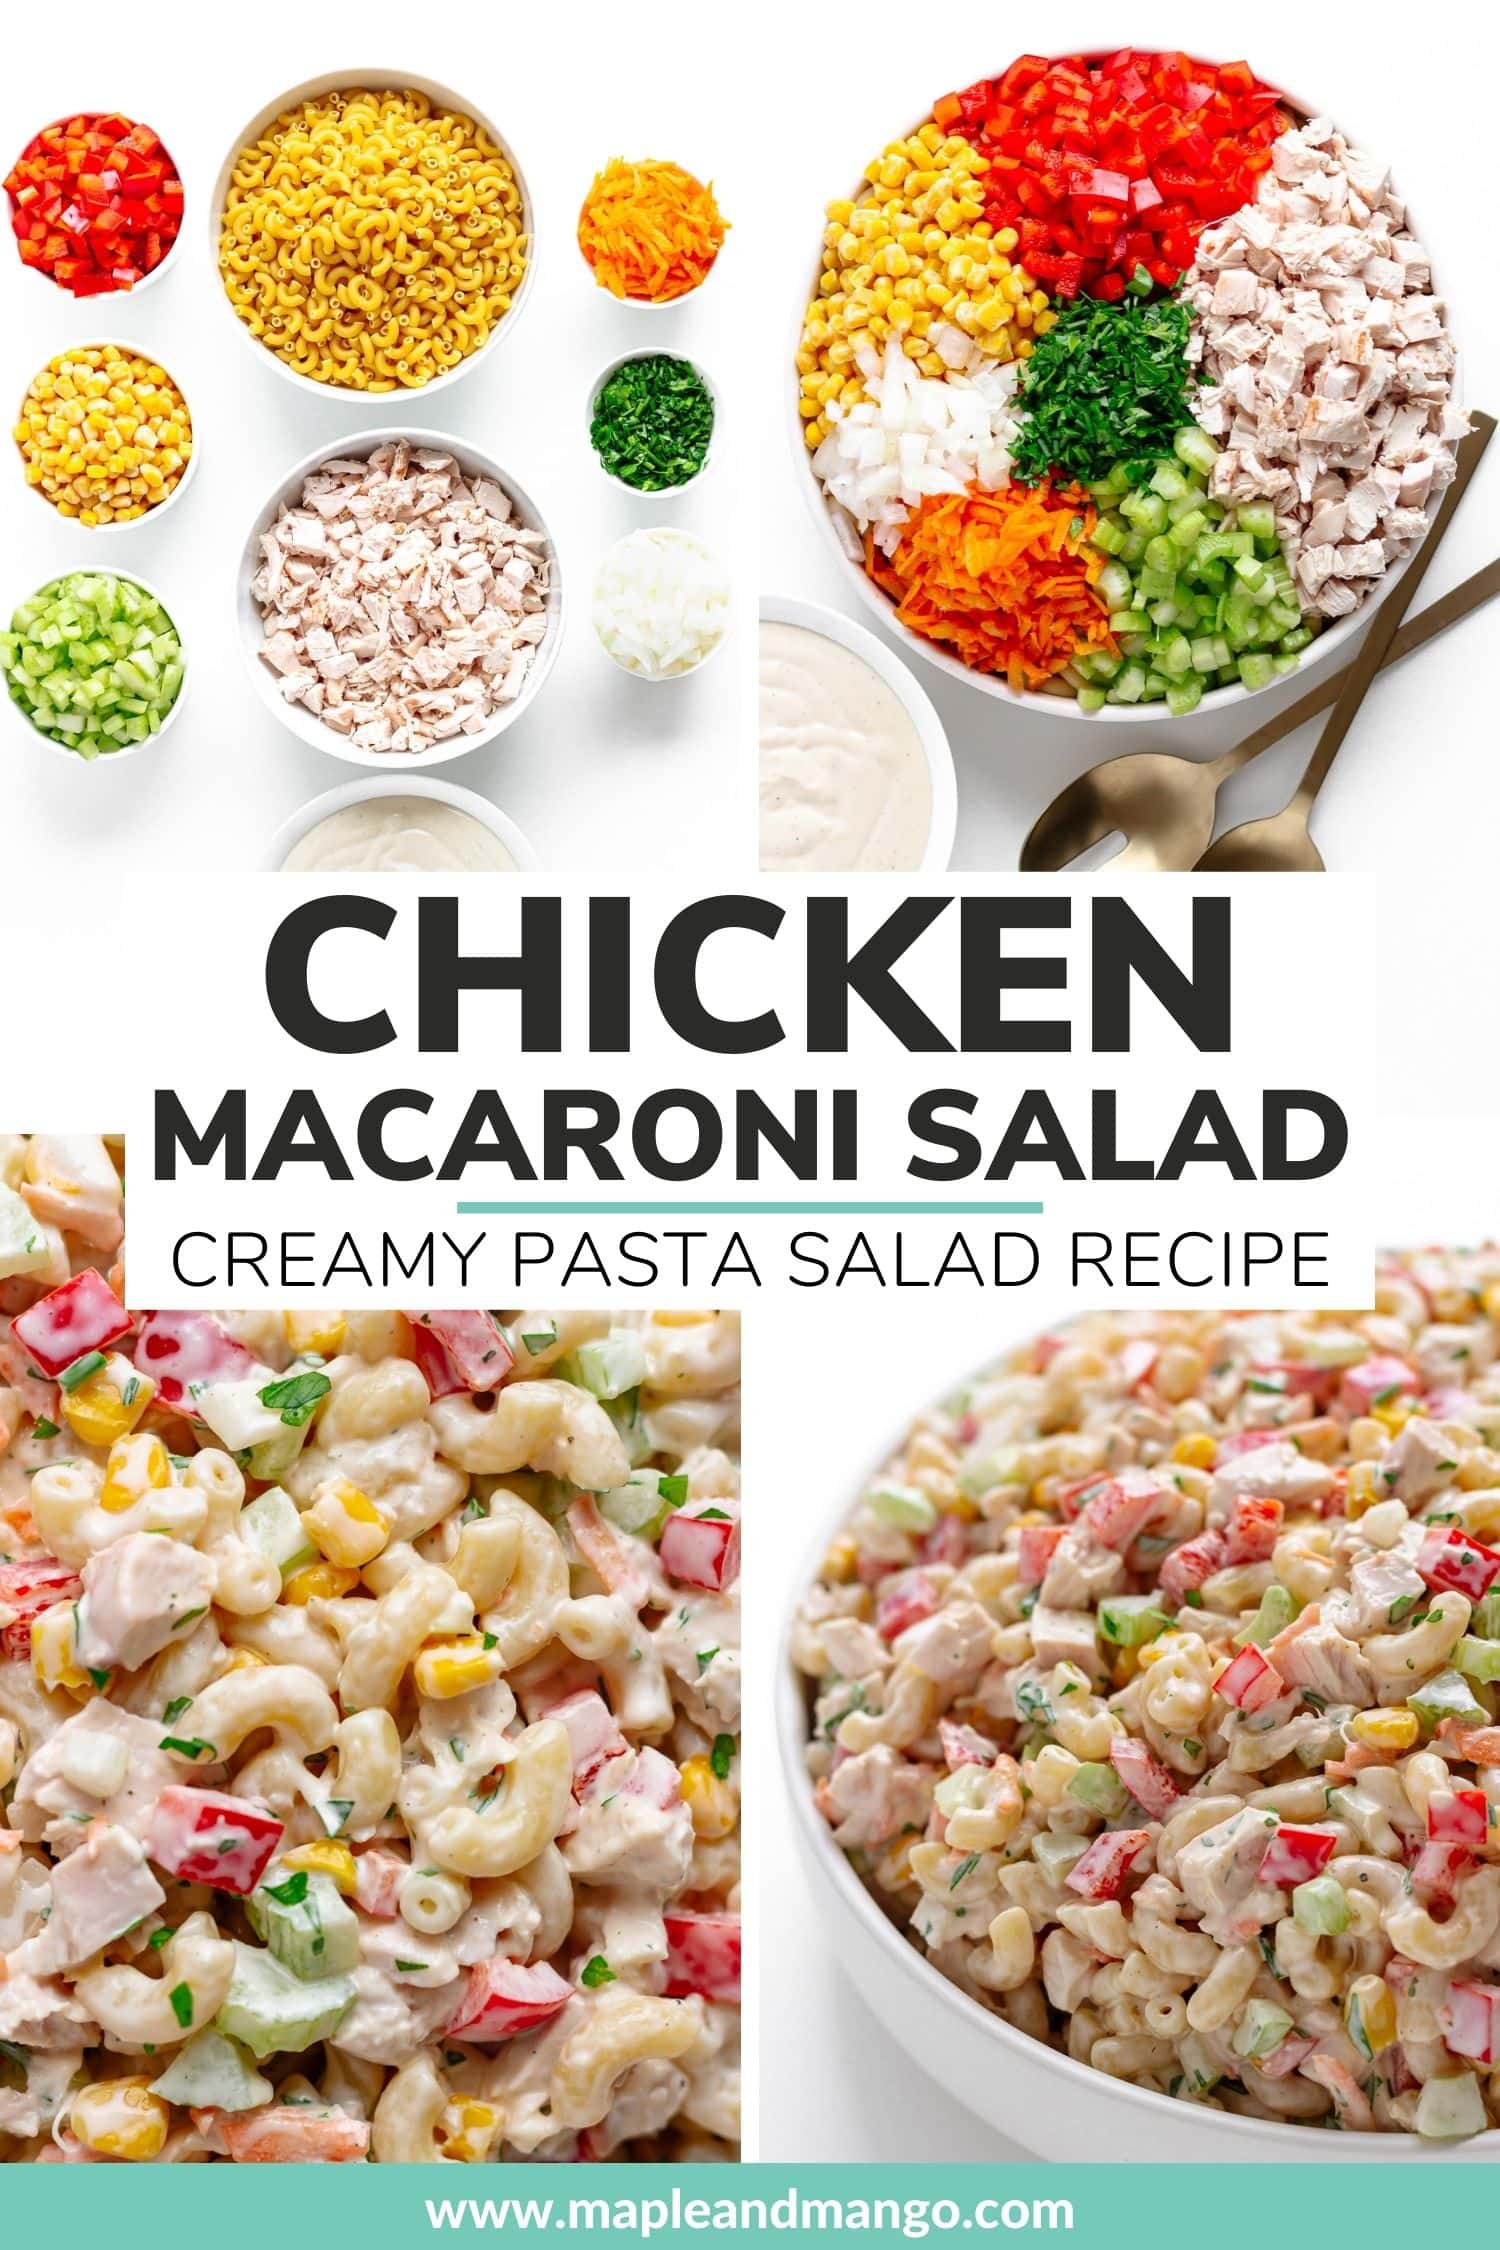 Pinterest photo collage graphic with text overlay "Chicken Macaroni Salad - Creamy Pasta Salad Recipe".